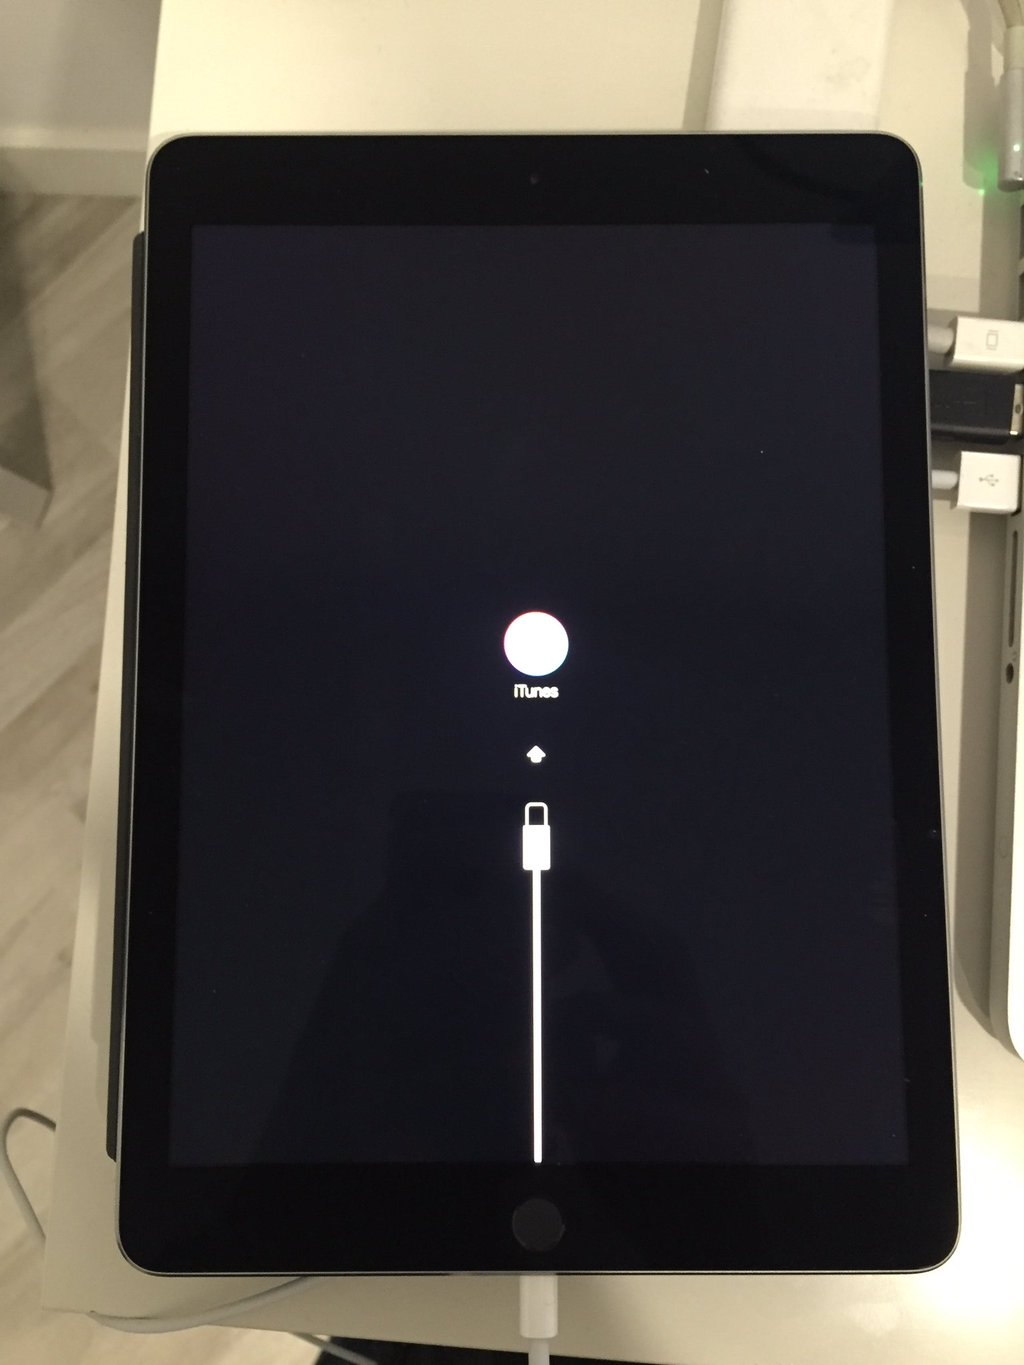 iOS 9.3.2 bricking some 9.7 inch iPad Pro models image 001